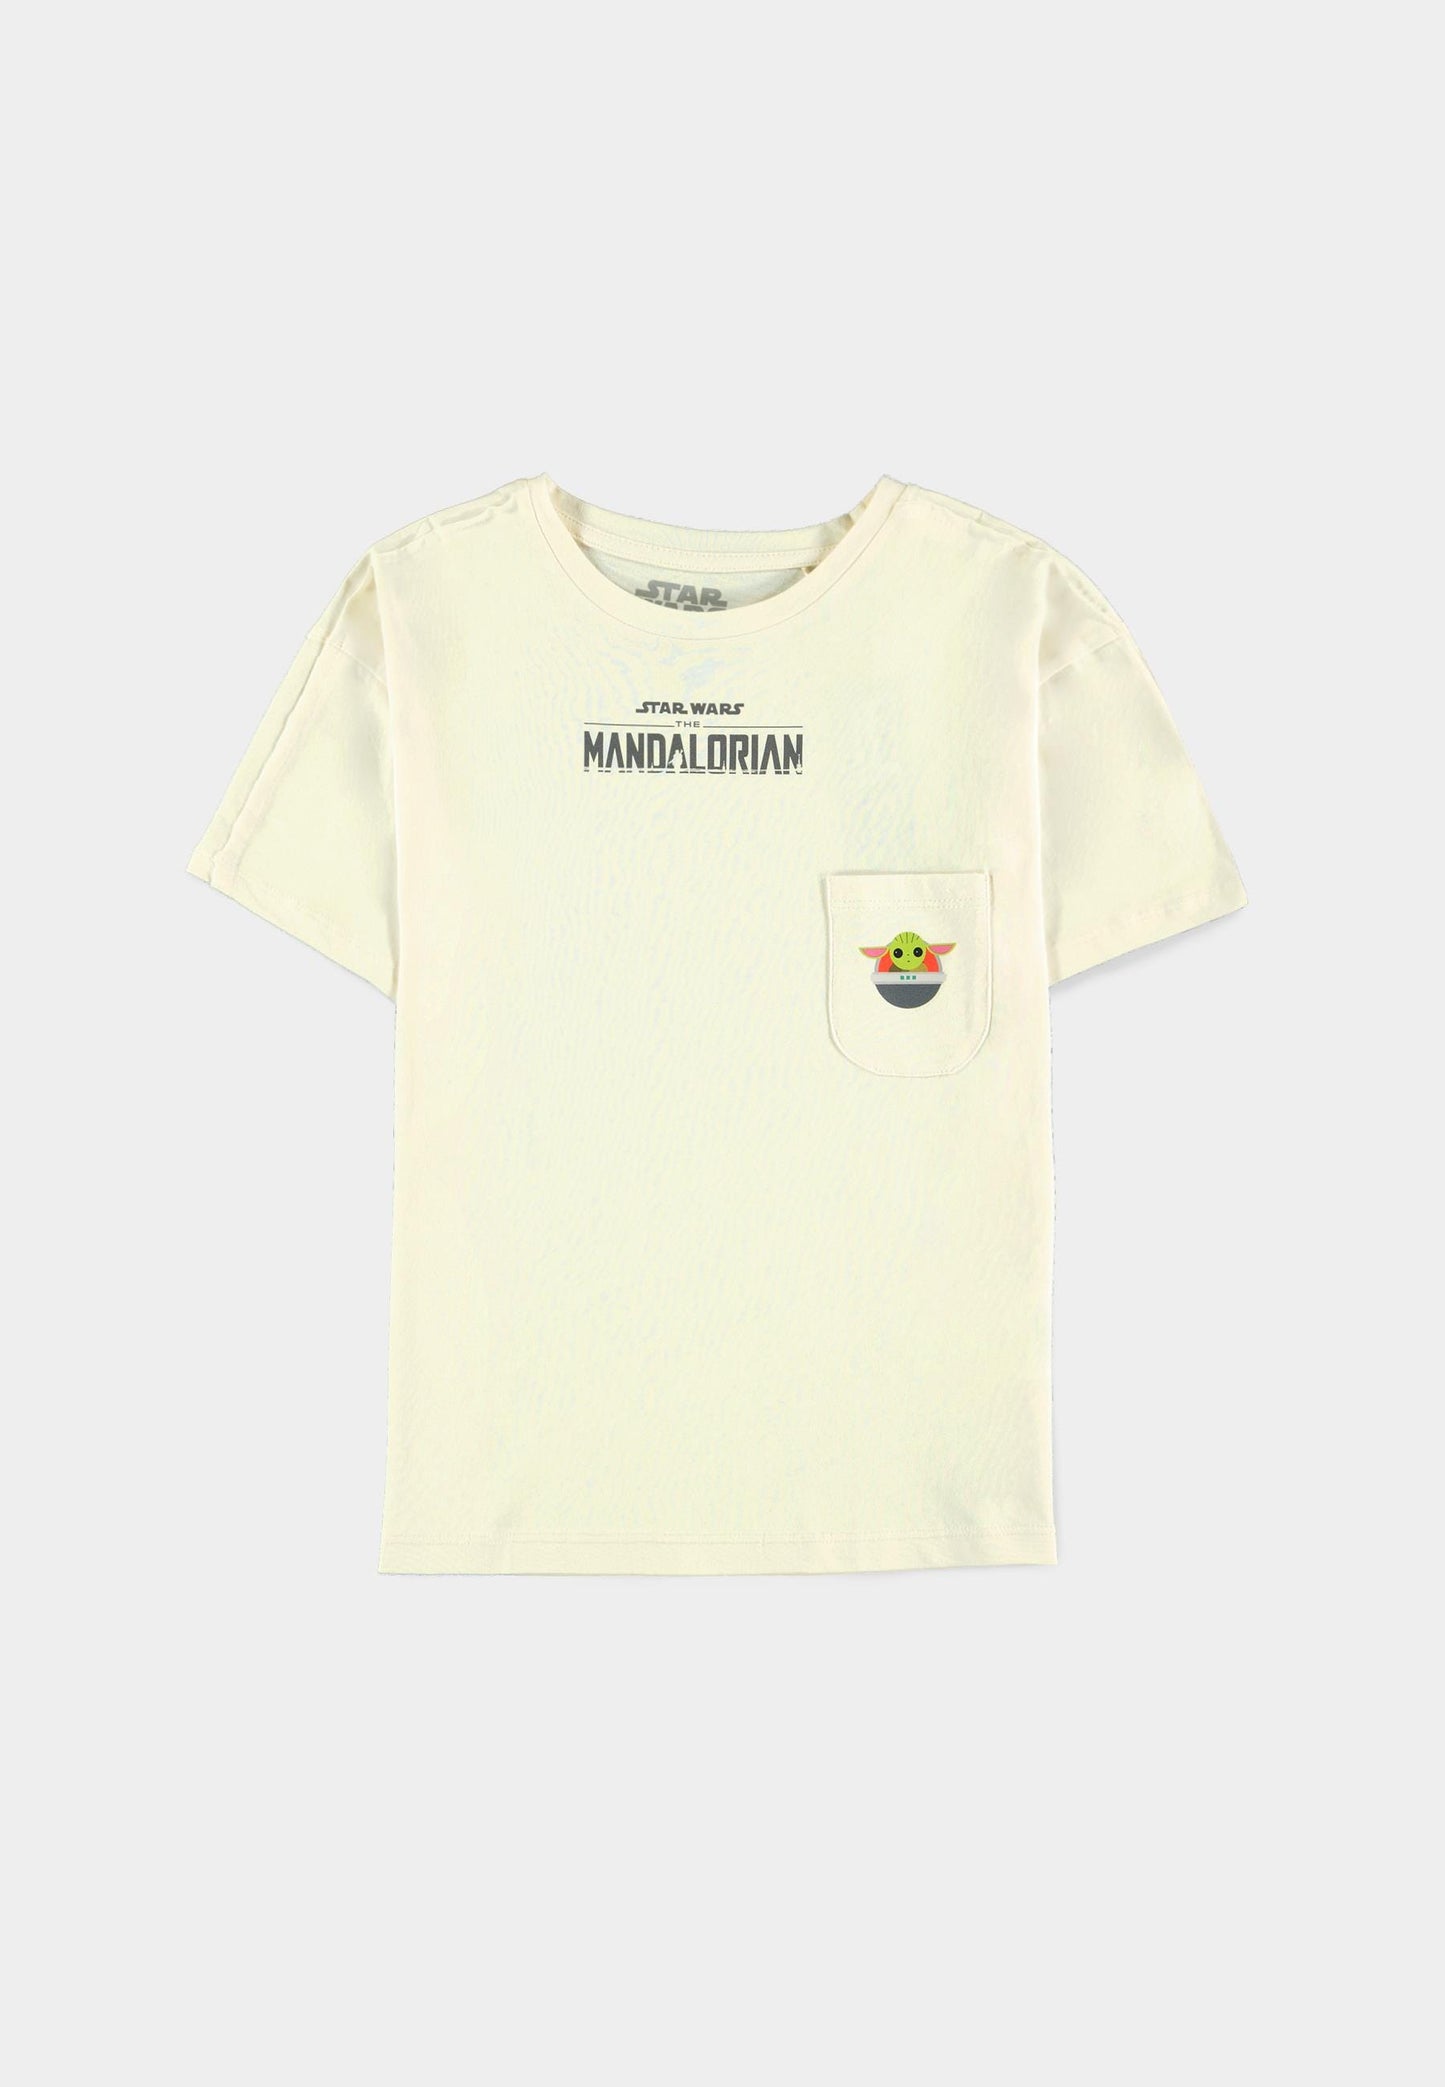 The Mandalorian - The Child Boys Short Sleeved T-shirt